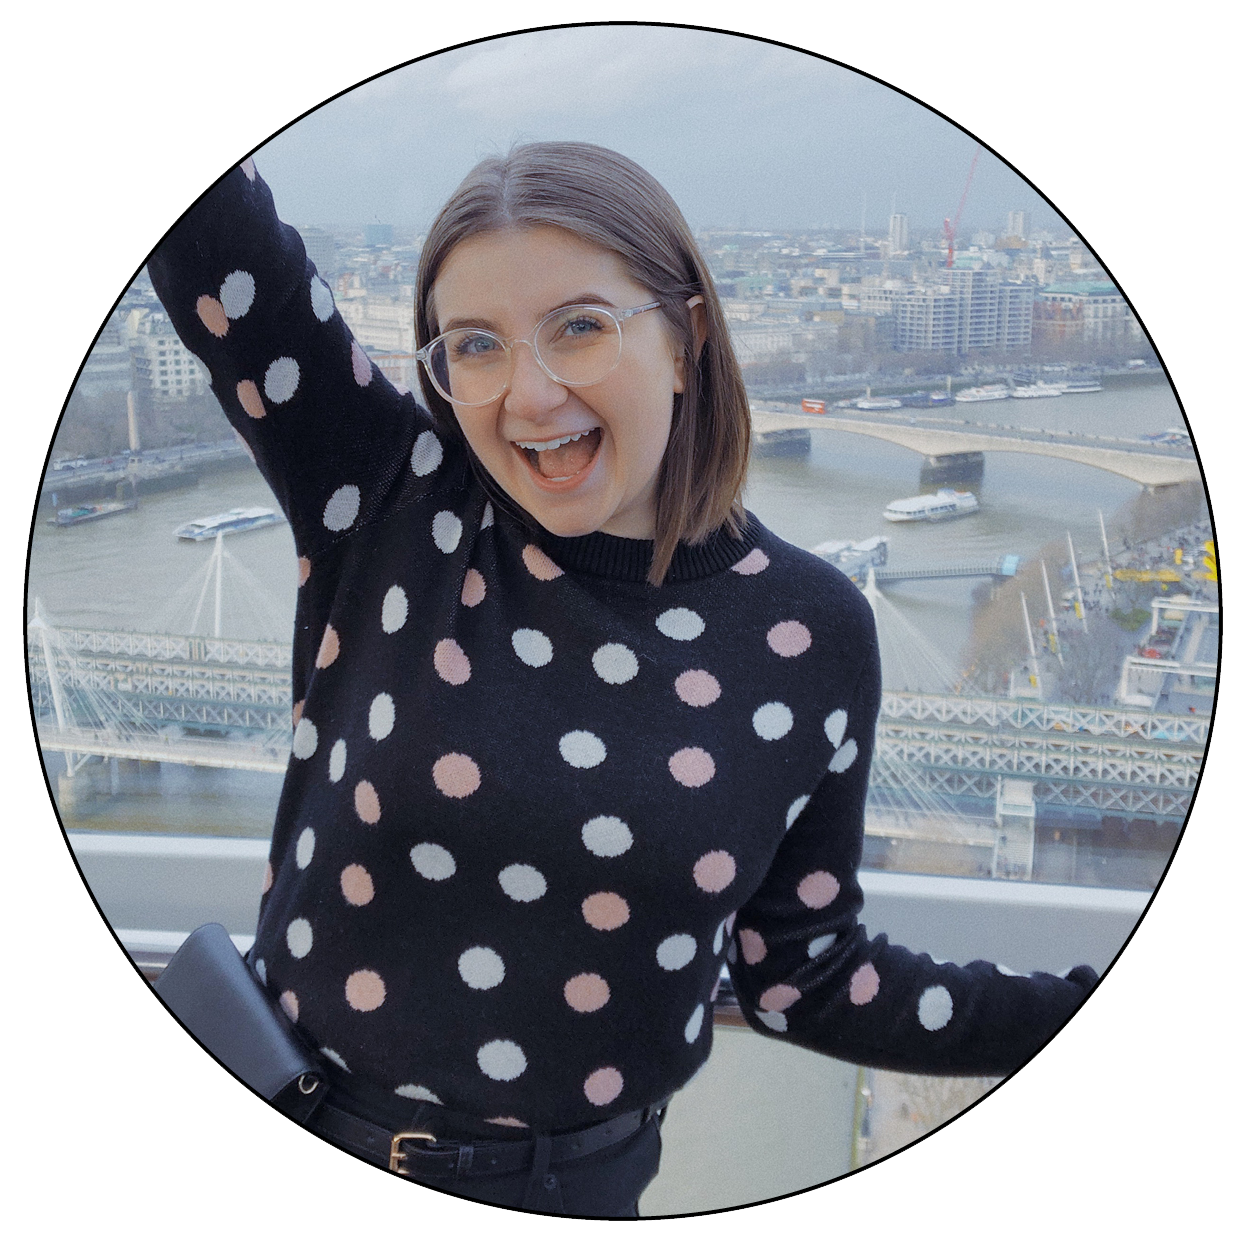 Alyssa Osman poses on the London Eye